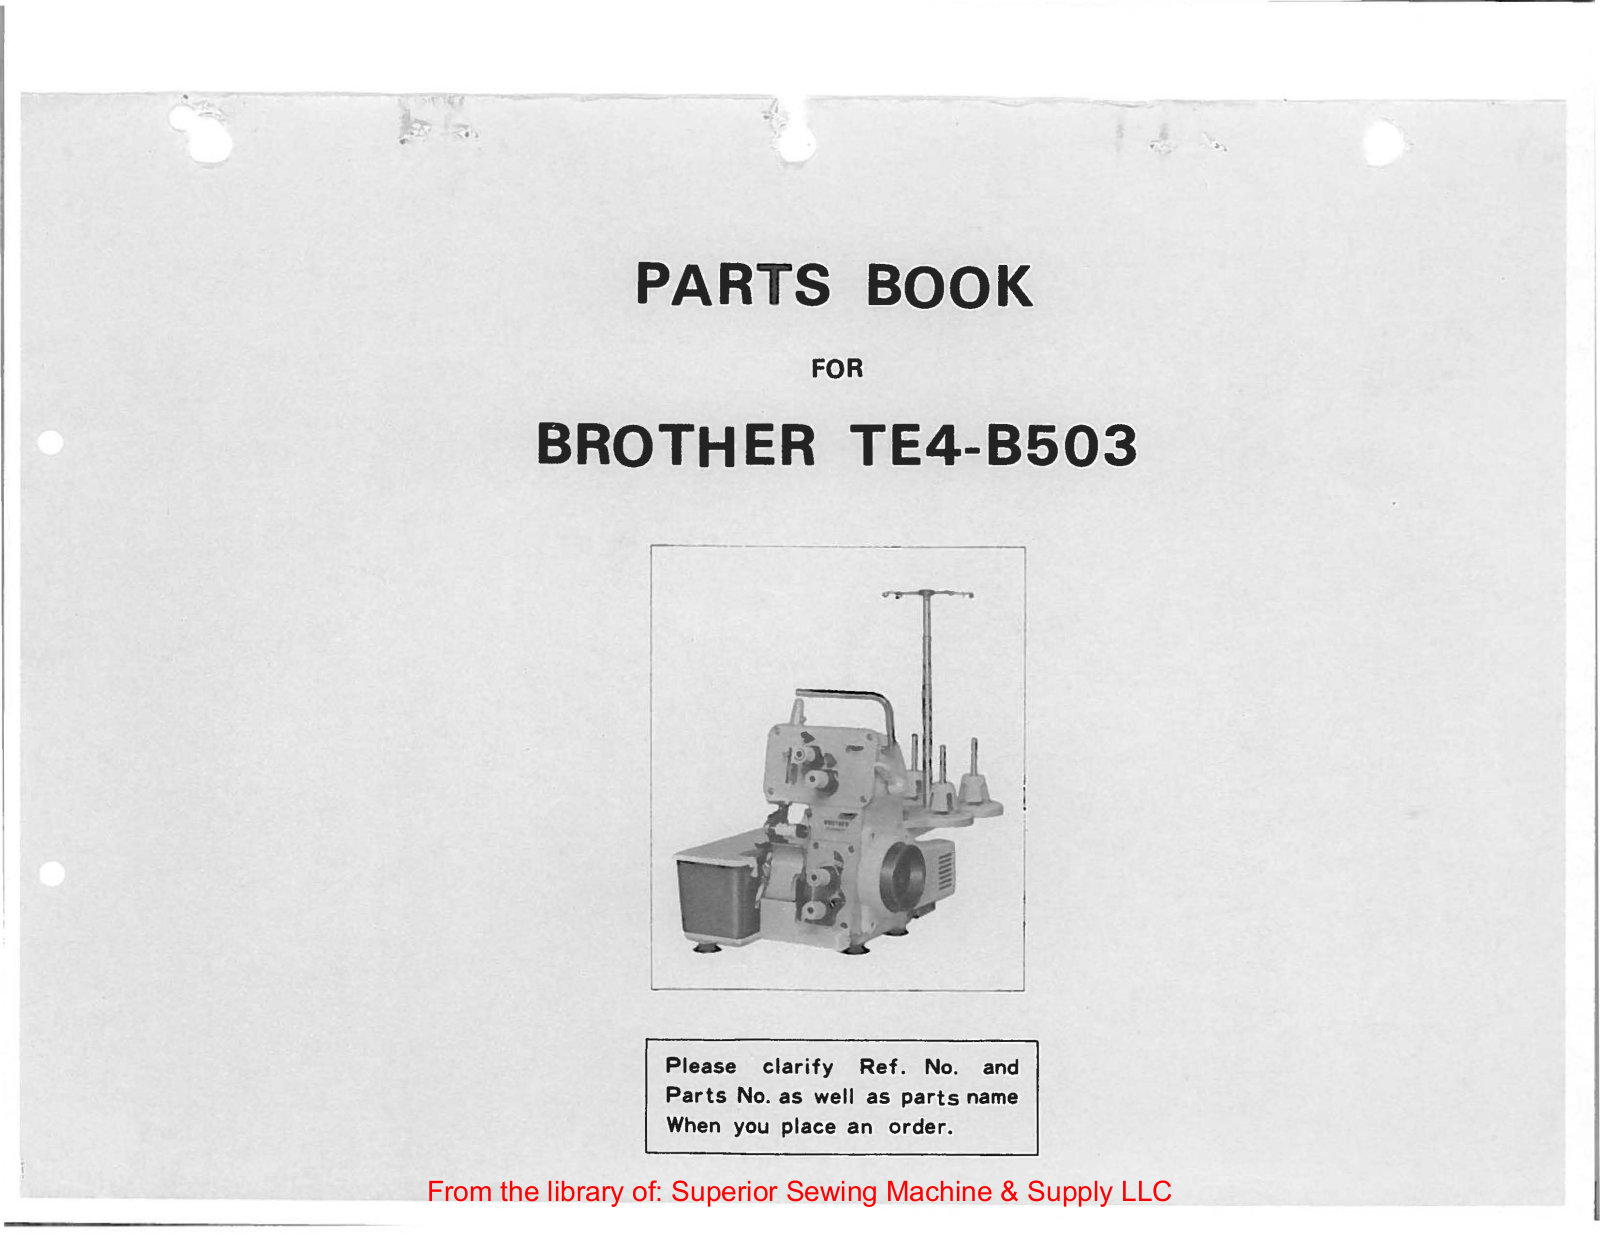 Brother TE4-B503 Manual